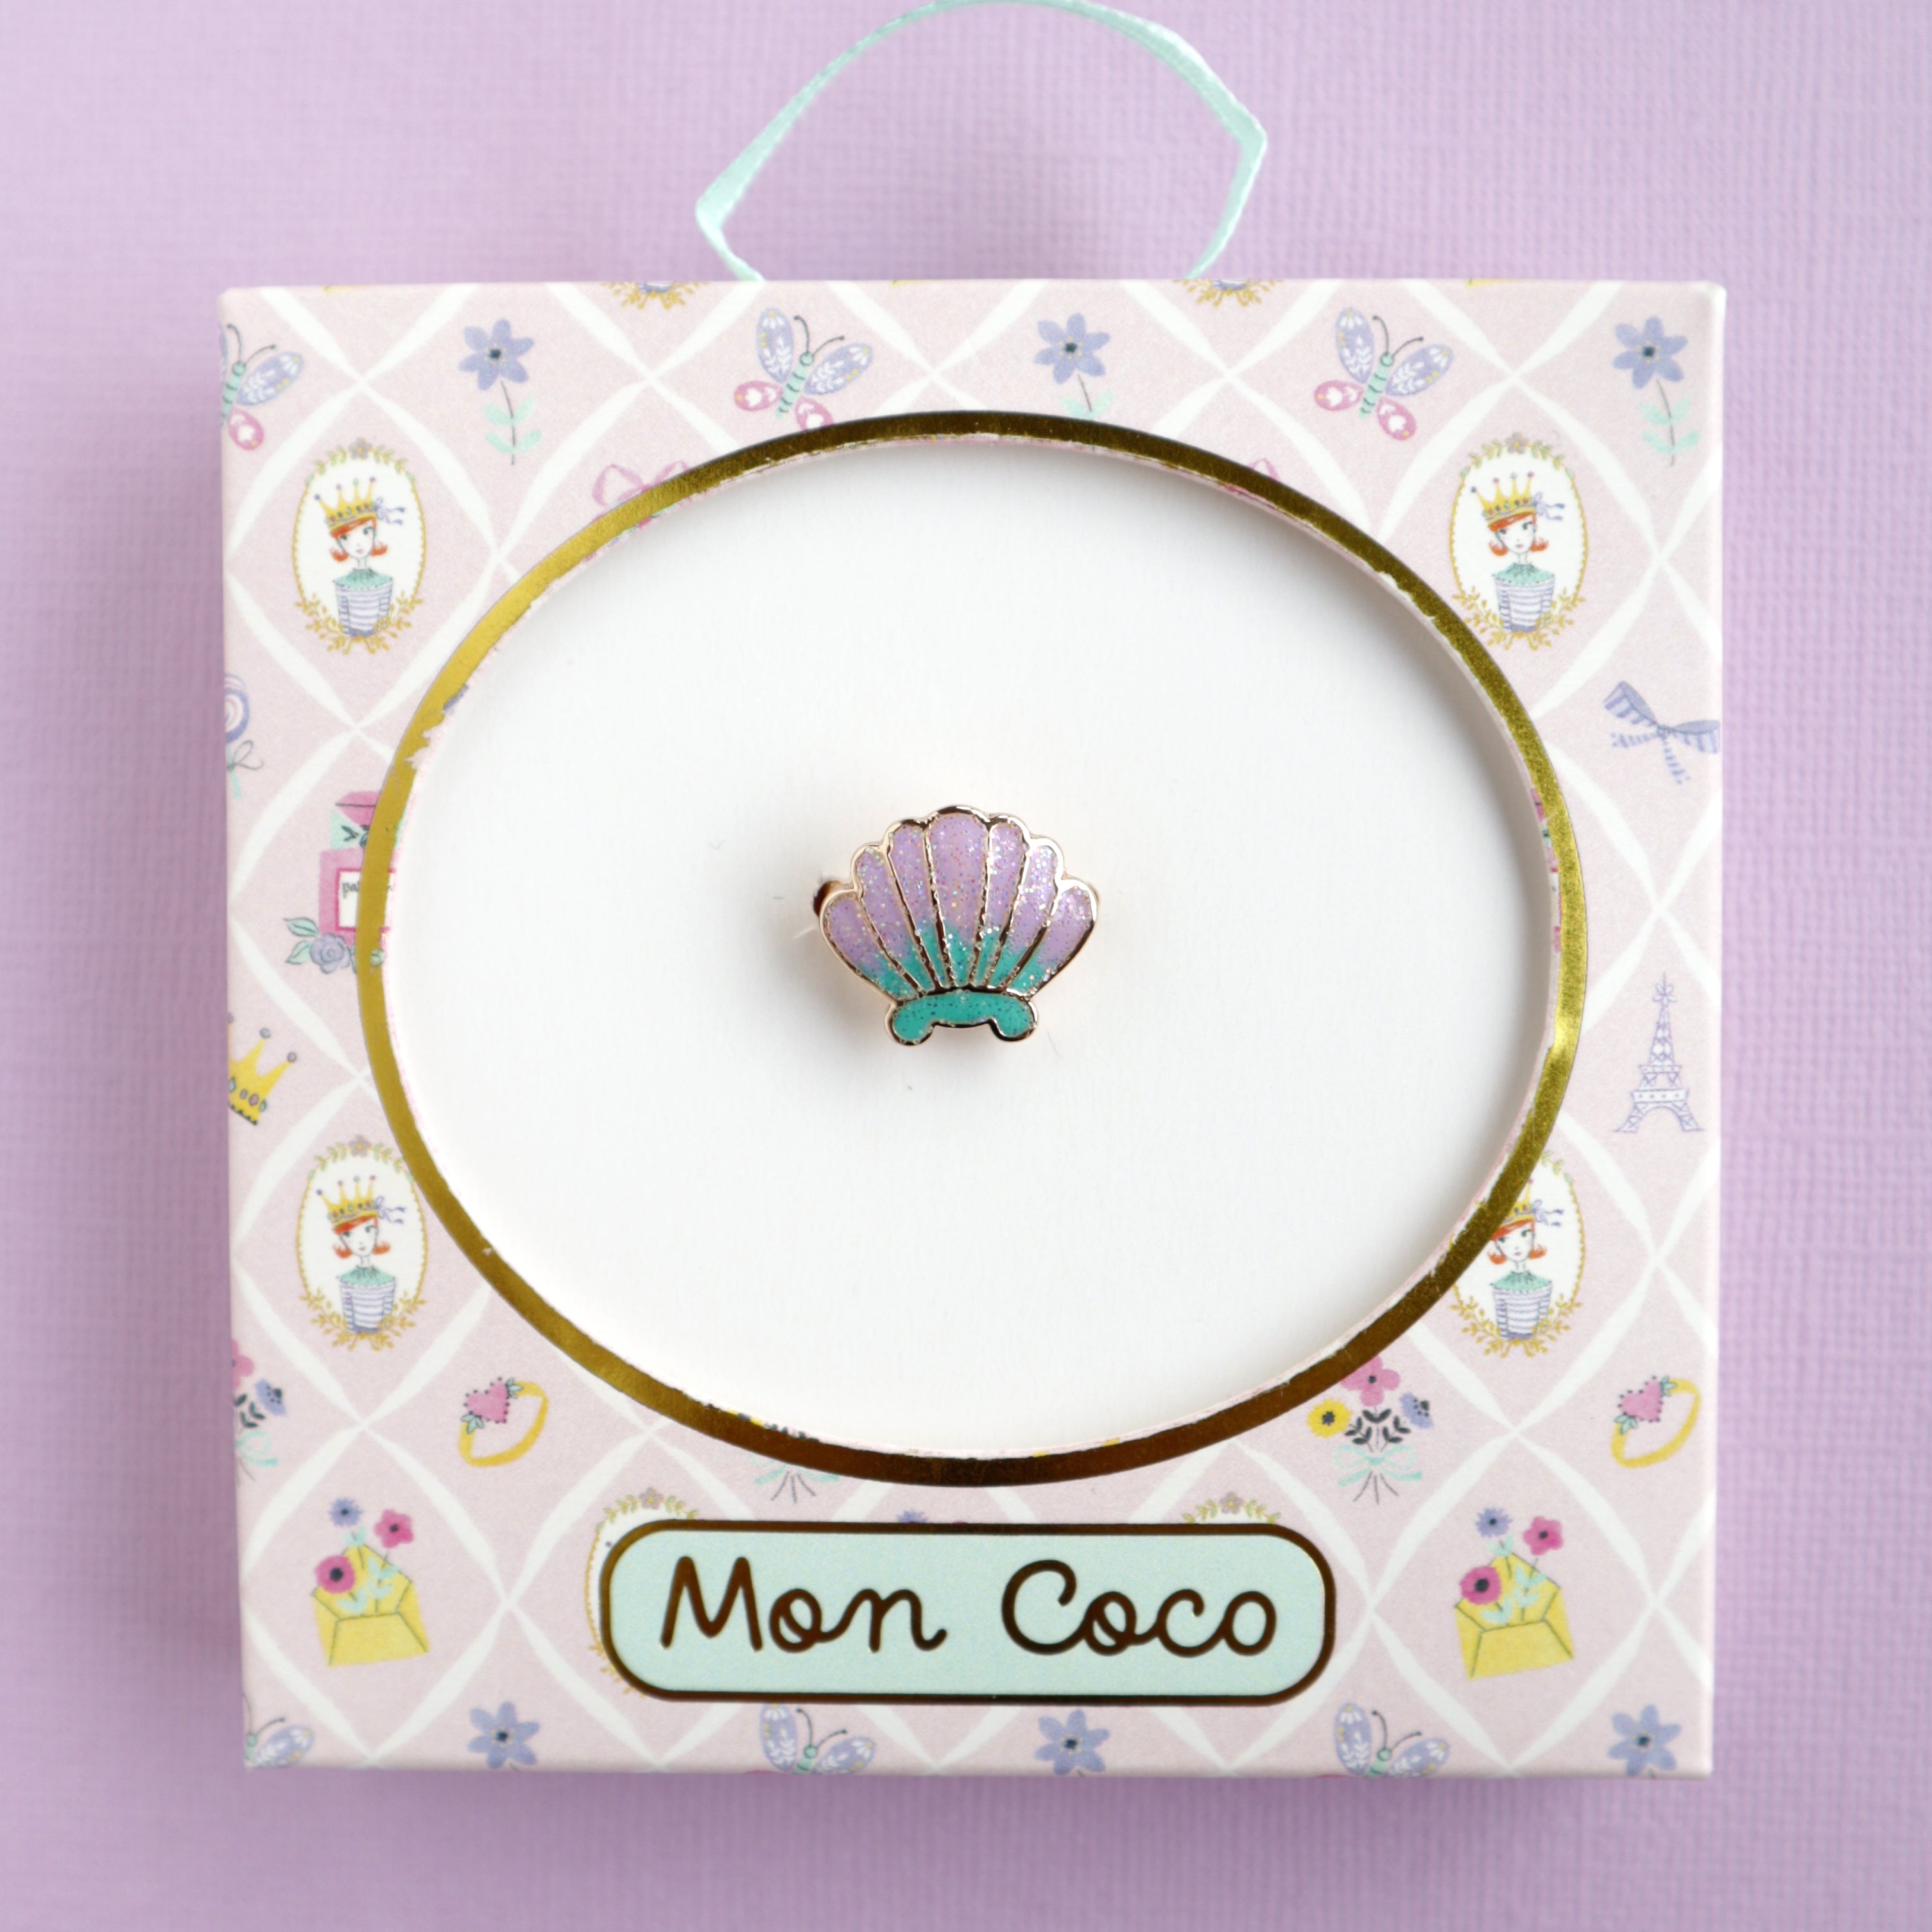 Mon Coco | Adjustable Ring - Mermaid Shell